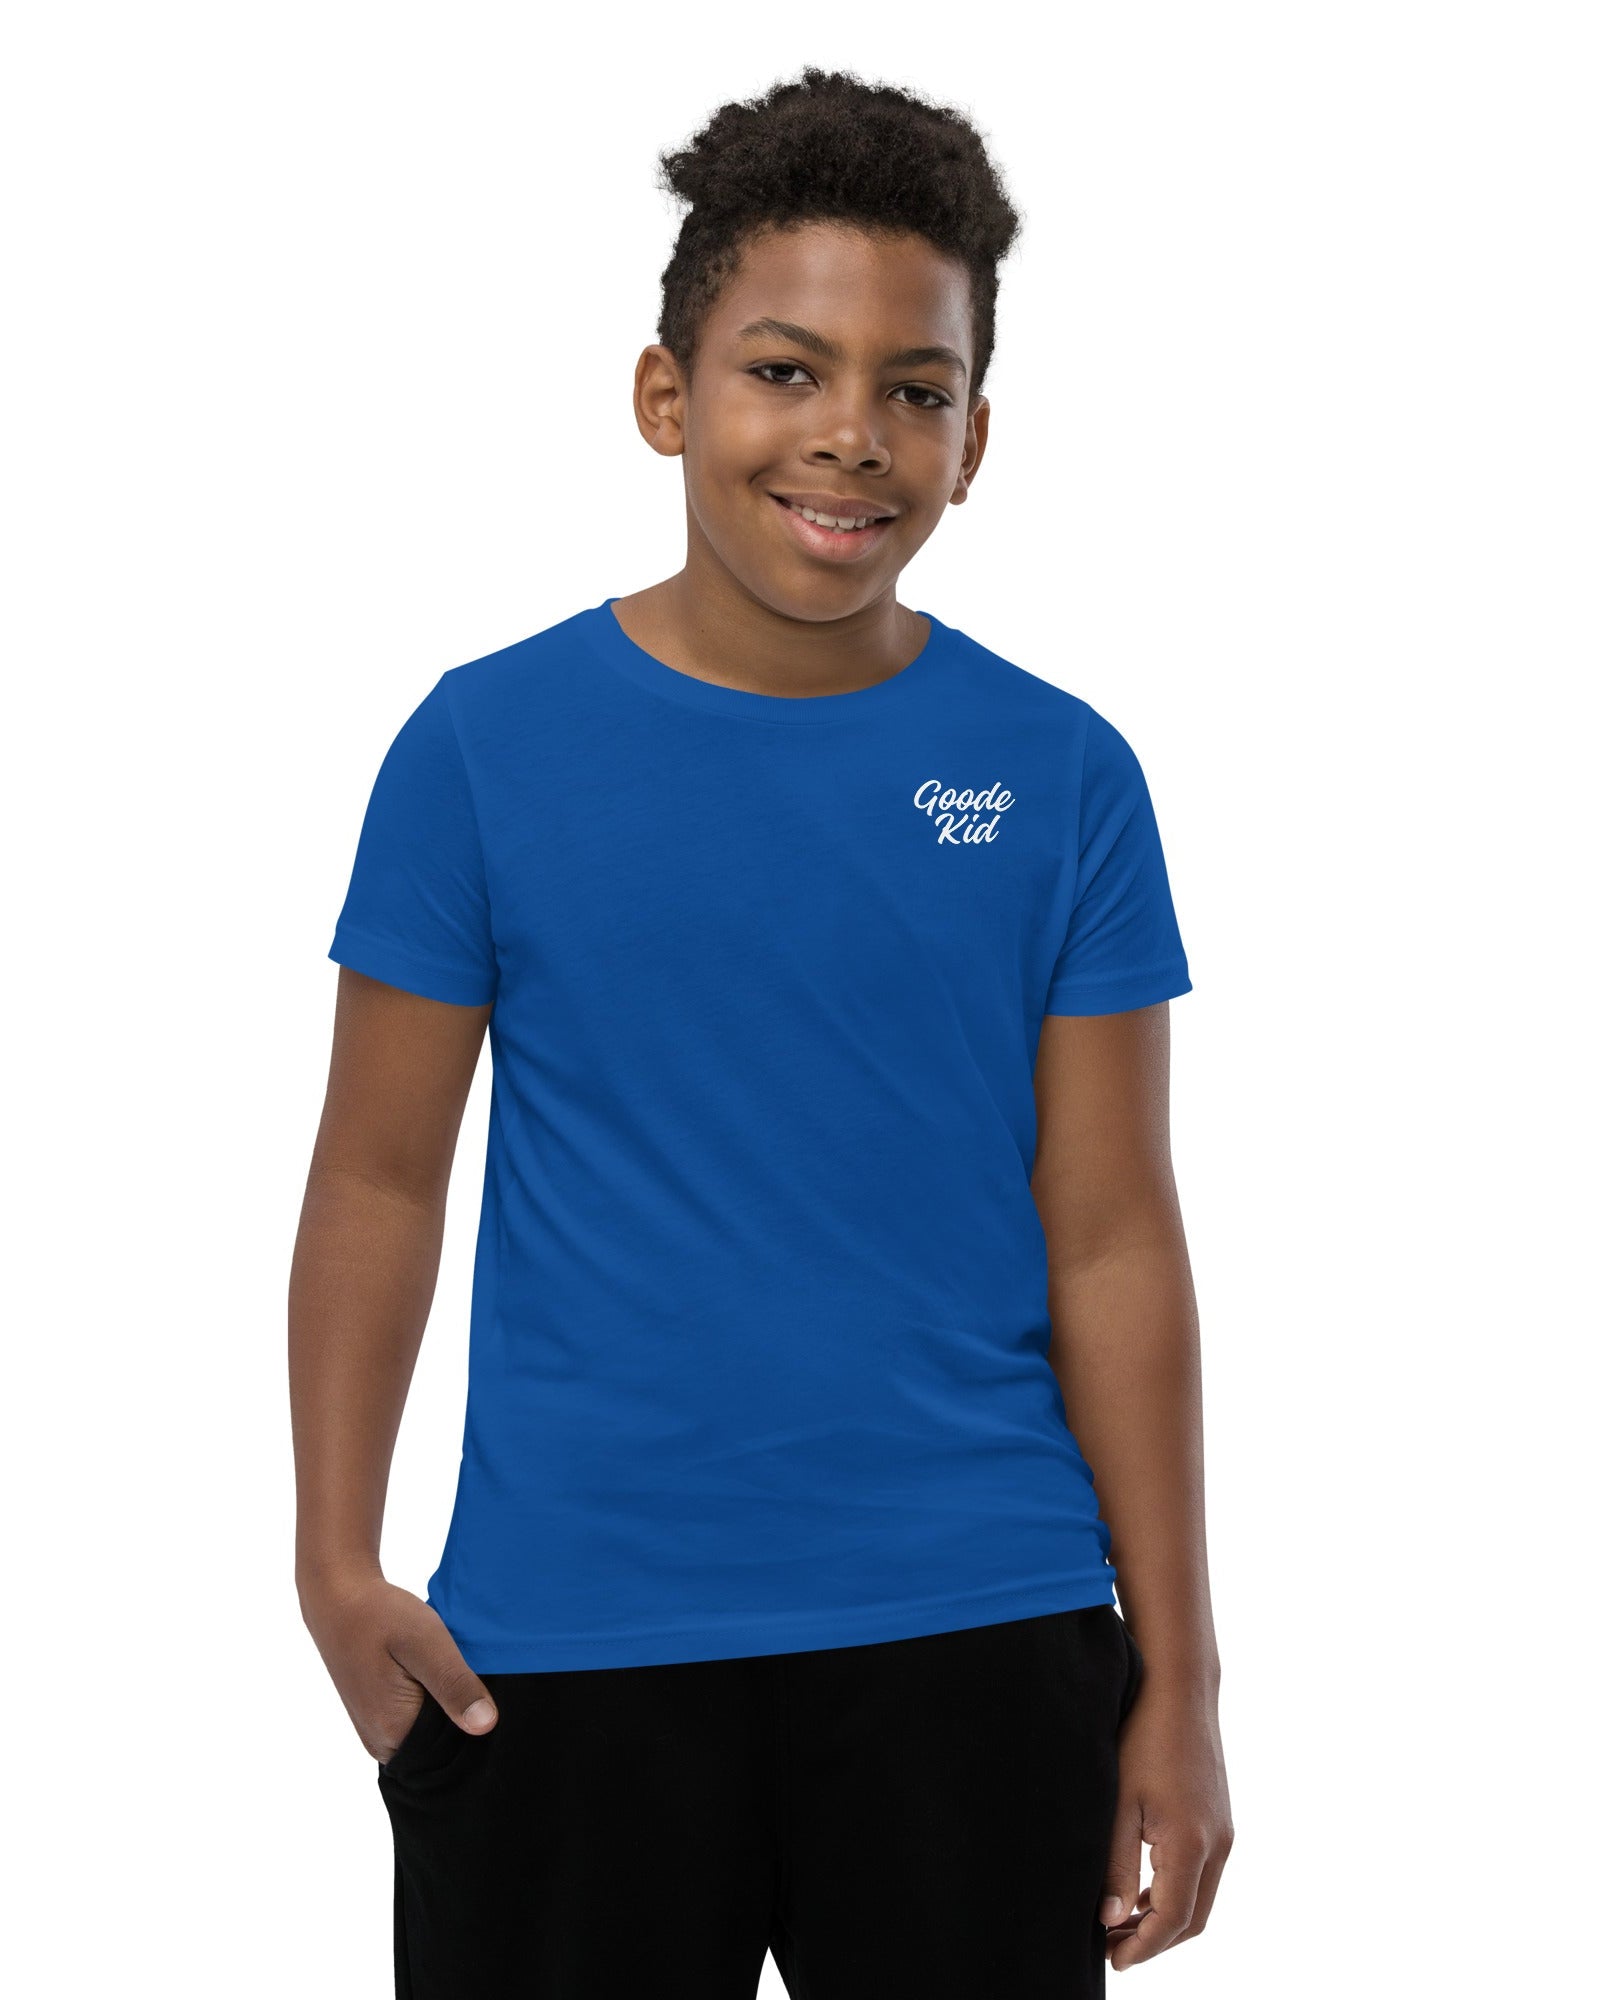 Goode Kid T-shirt | Youth True Royal / S kids t-shirts Jolly & Goode